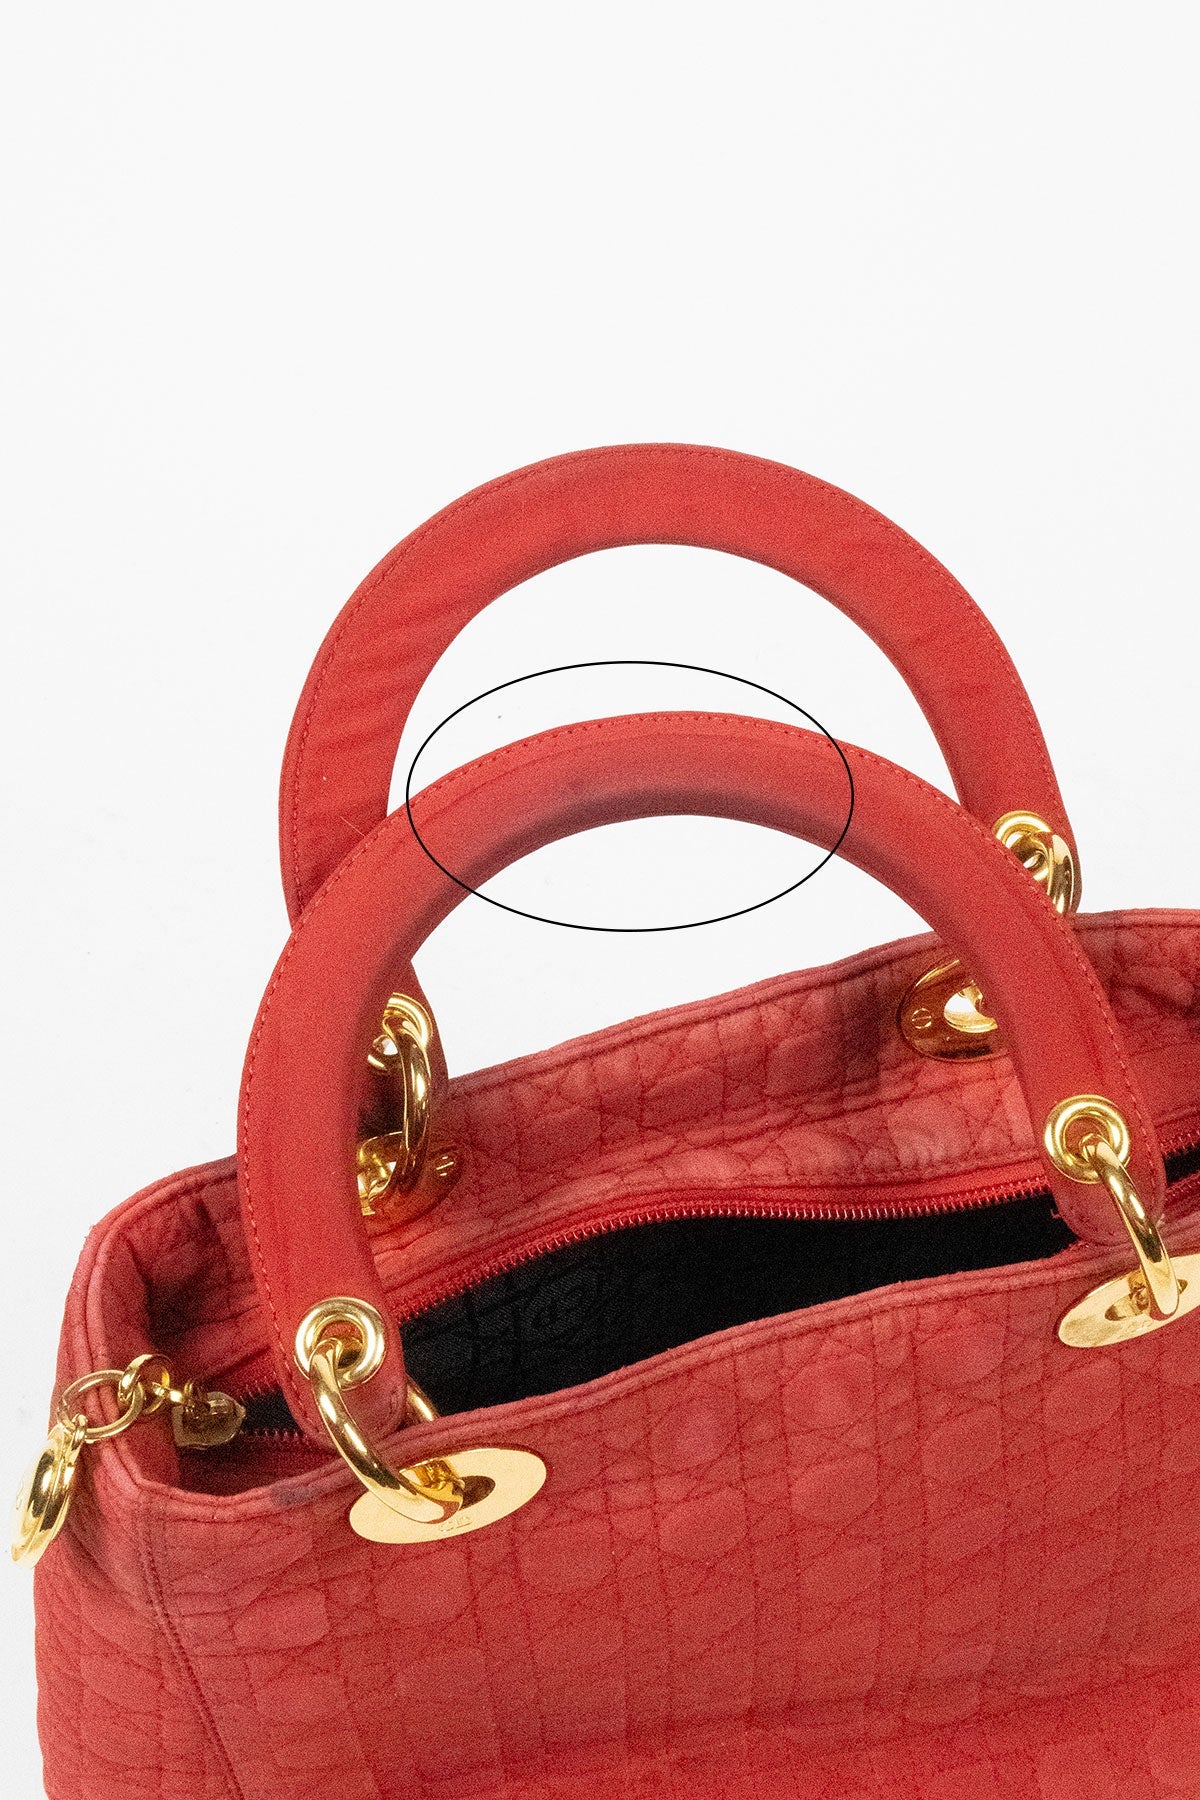 Christian Dior Medium Red Canvas Lady Handbag - Jade Vintage